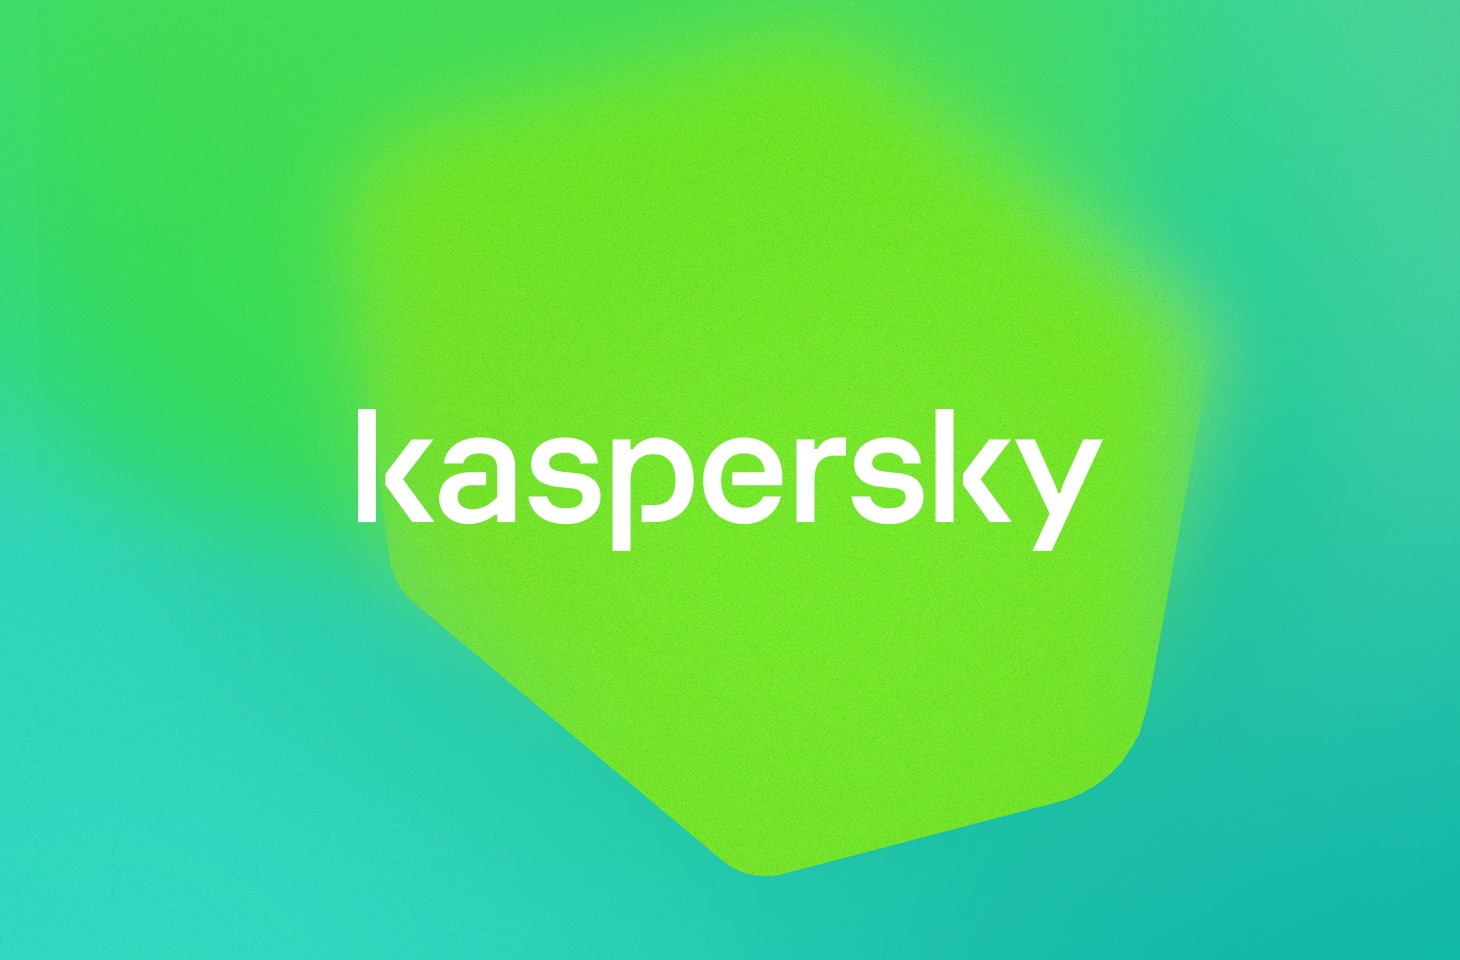 kaspersky-rebranding-in-details-featured